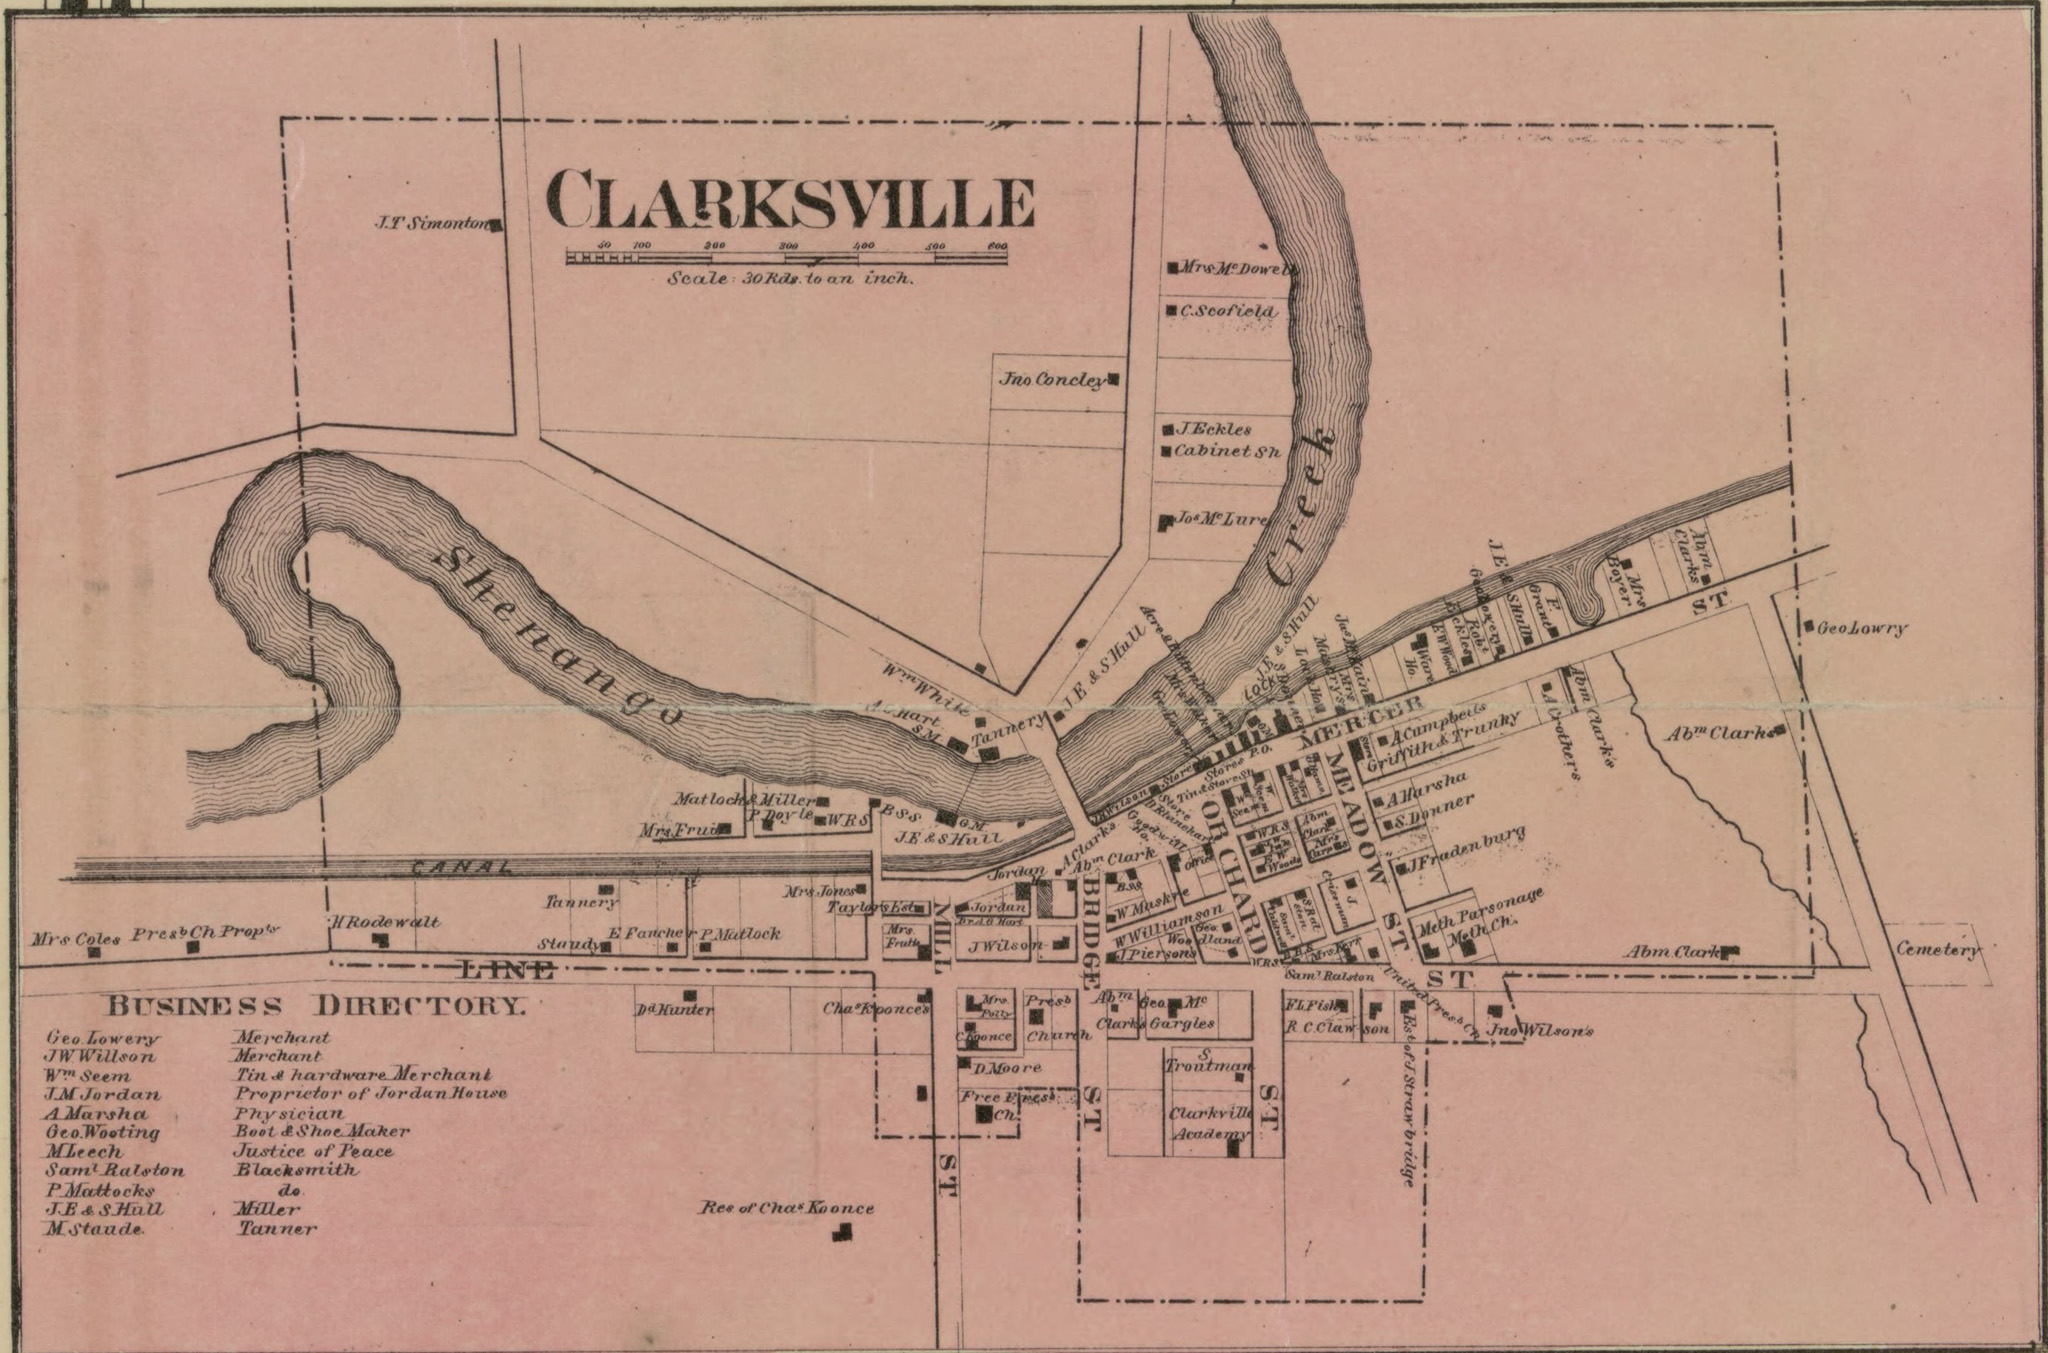 1860 Map or Clarksburg